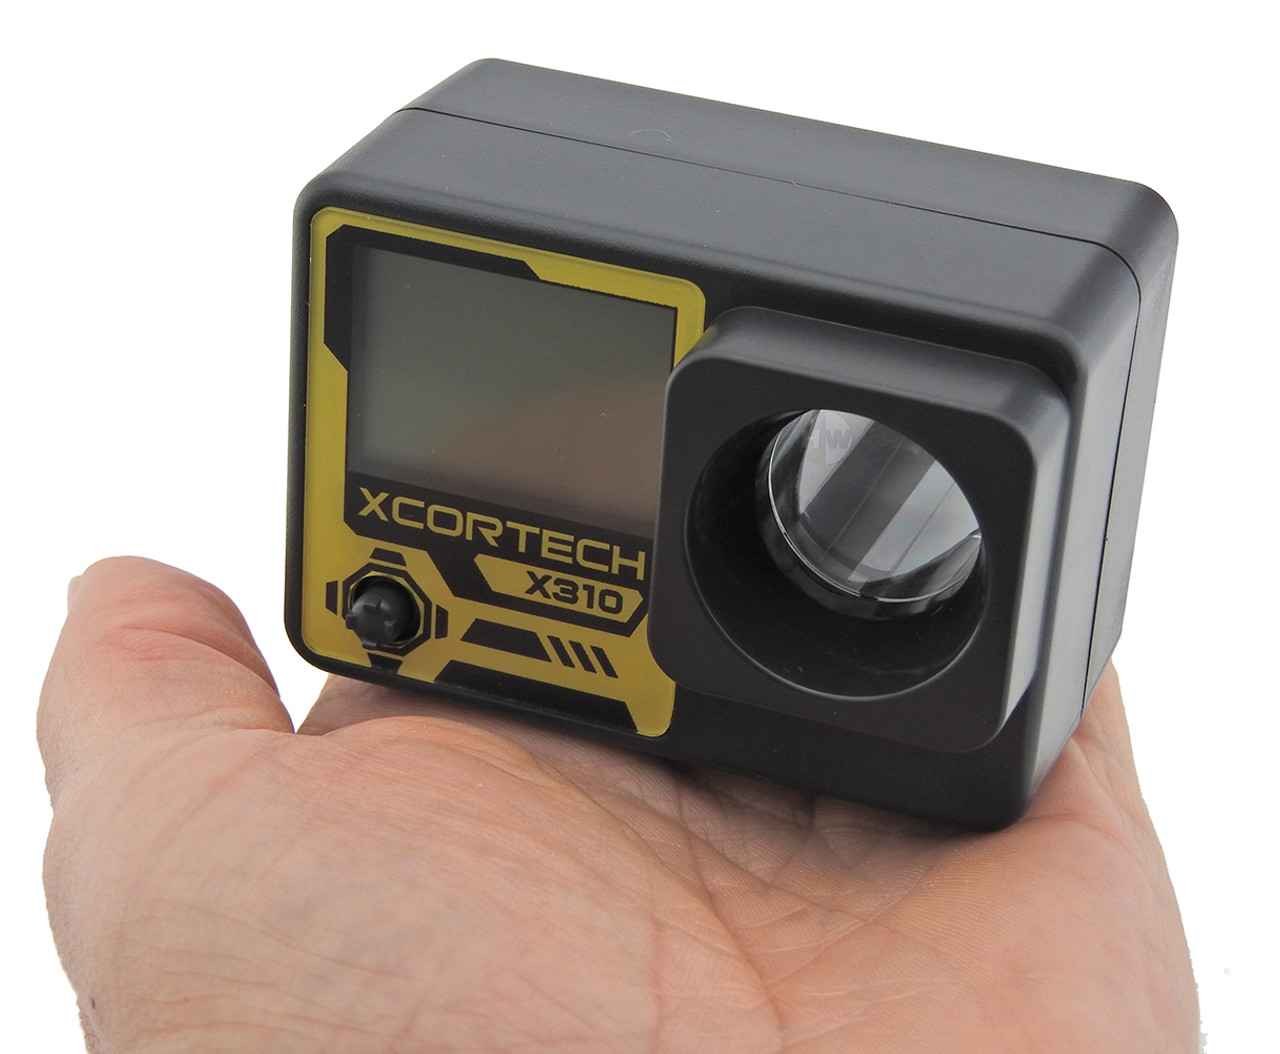  Xcortech New X310 Mini Pocket Chrono Chronograph